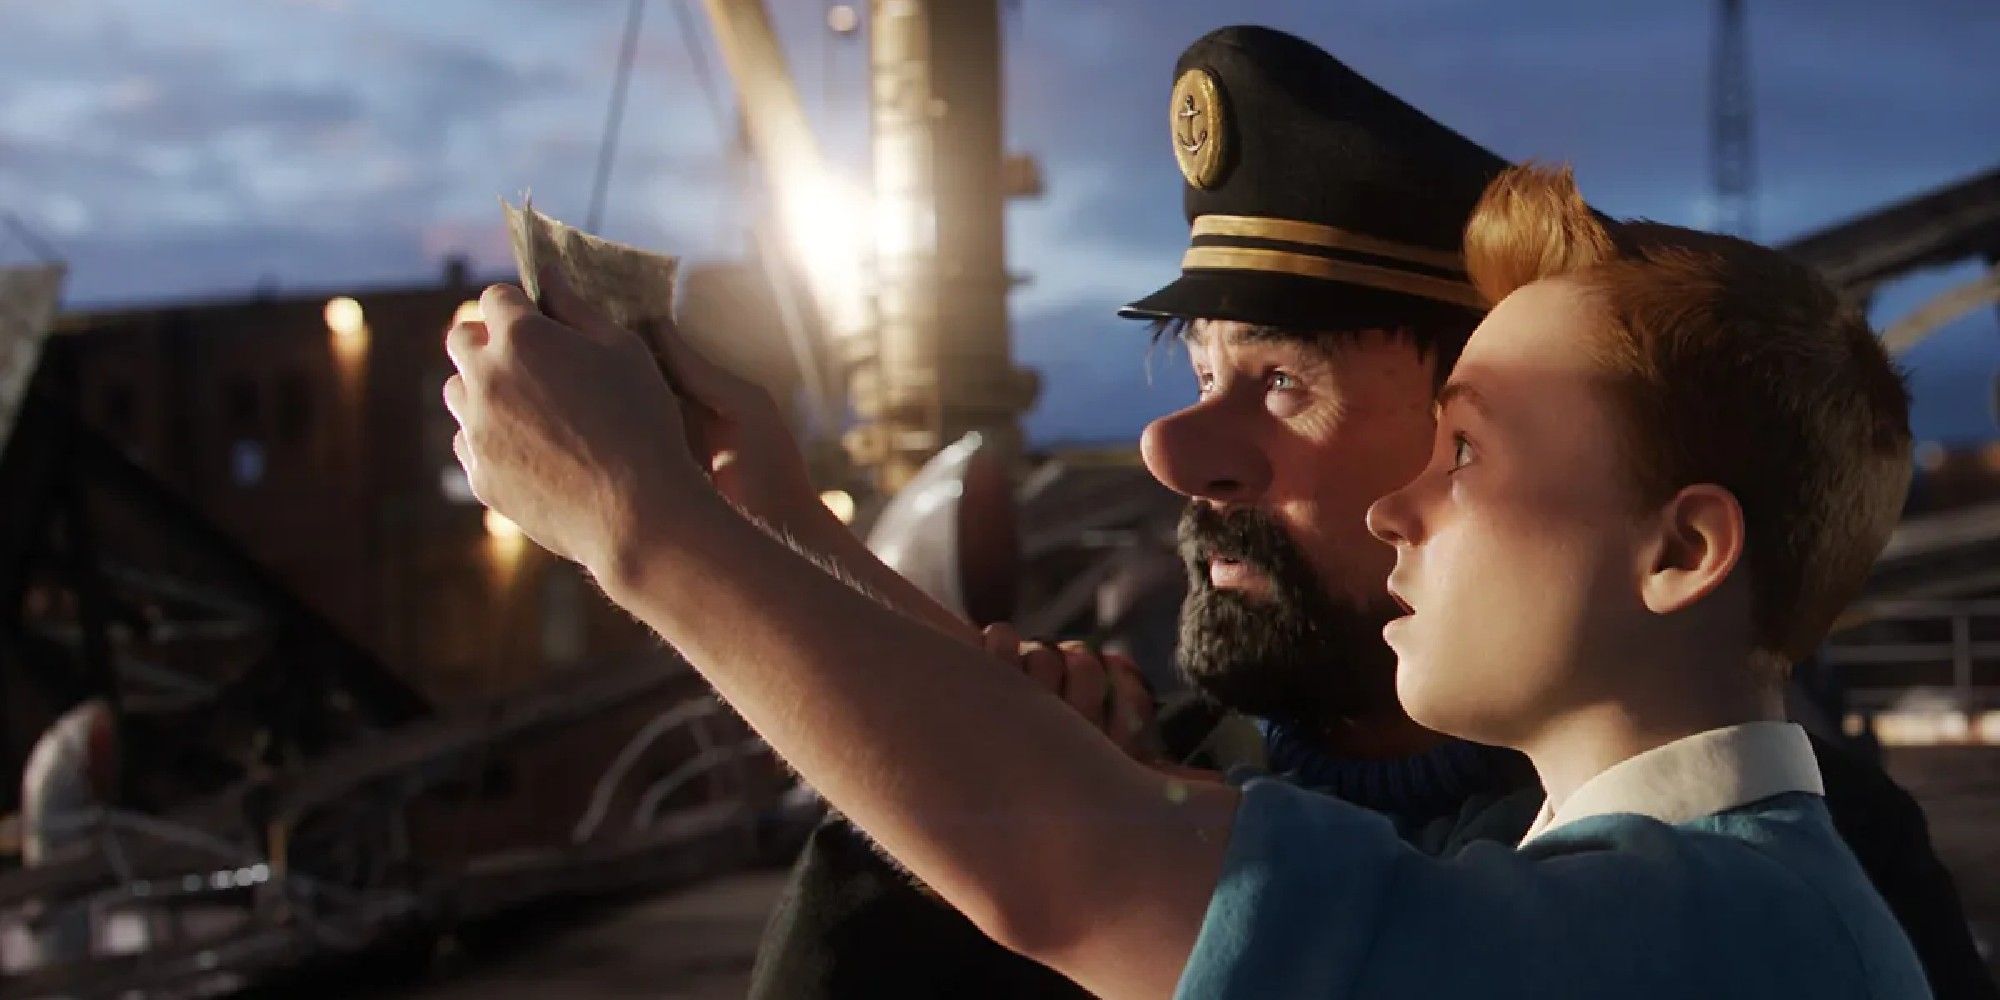 Tintin and Captain Haddock examine a map